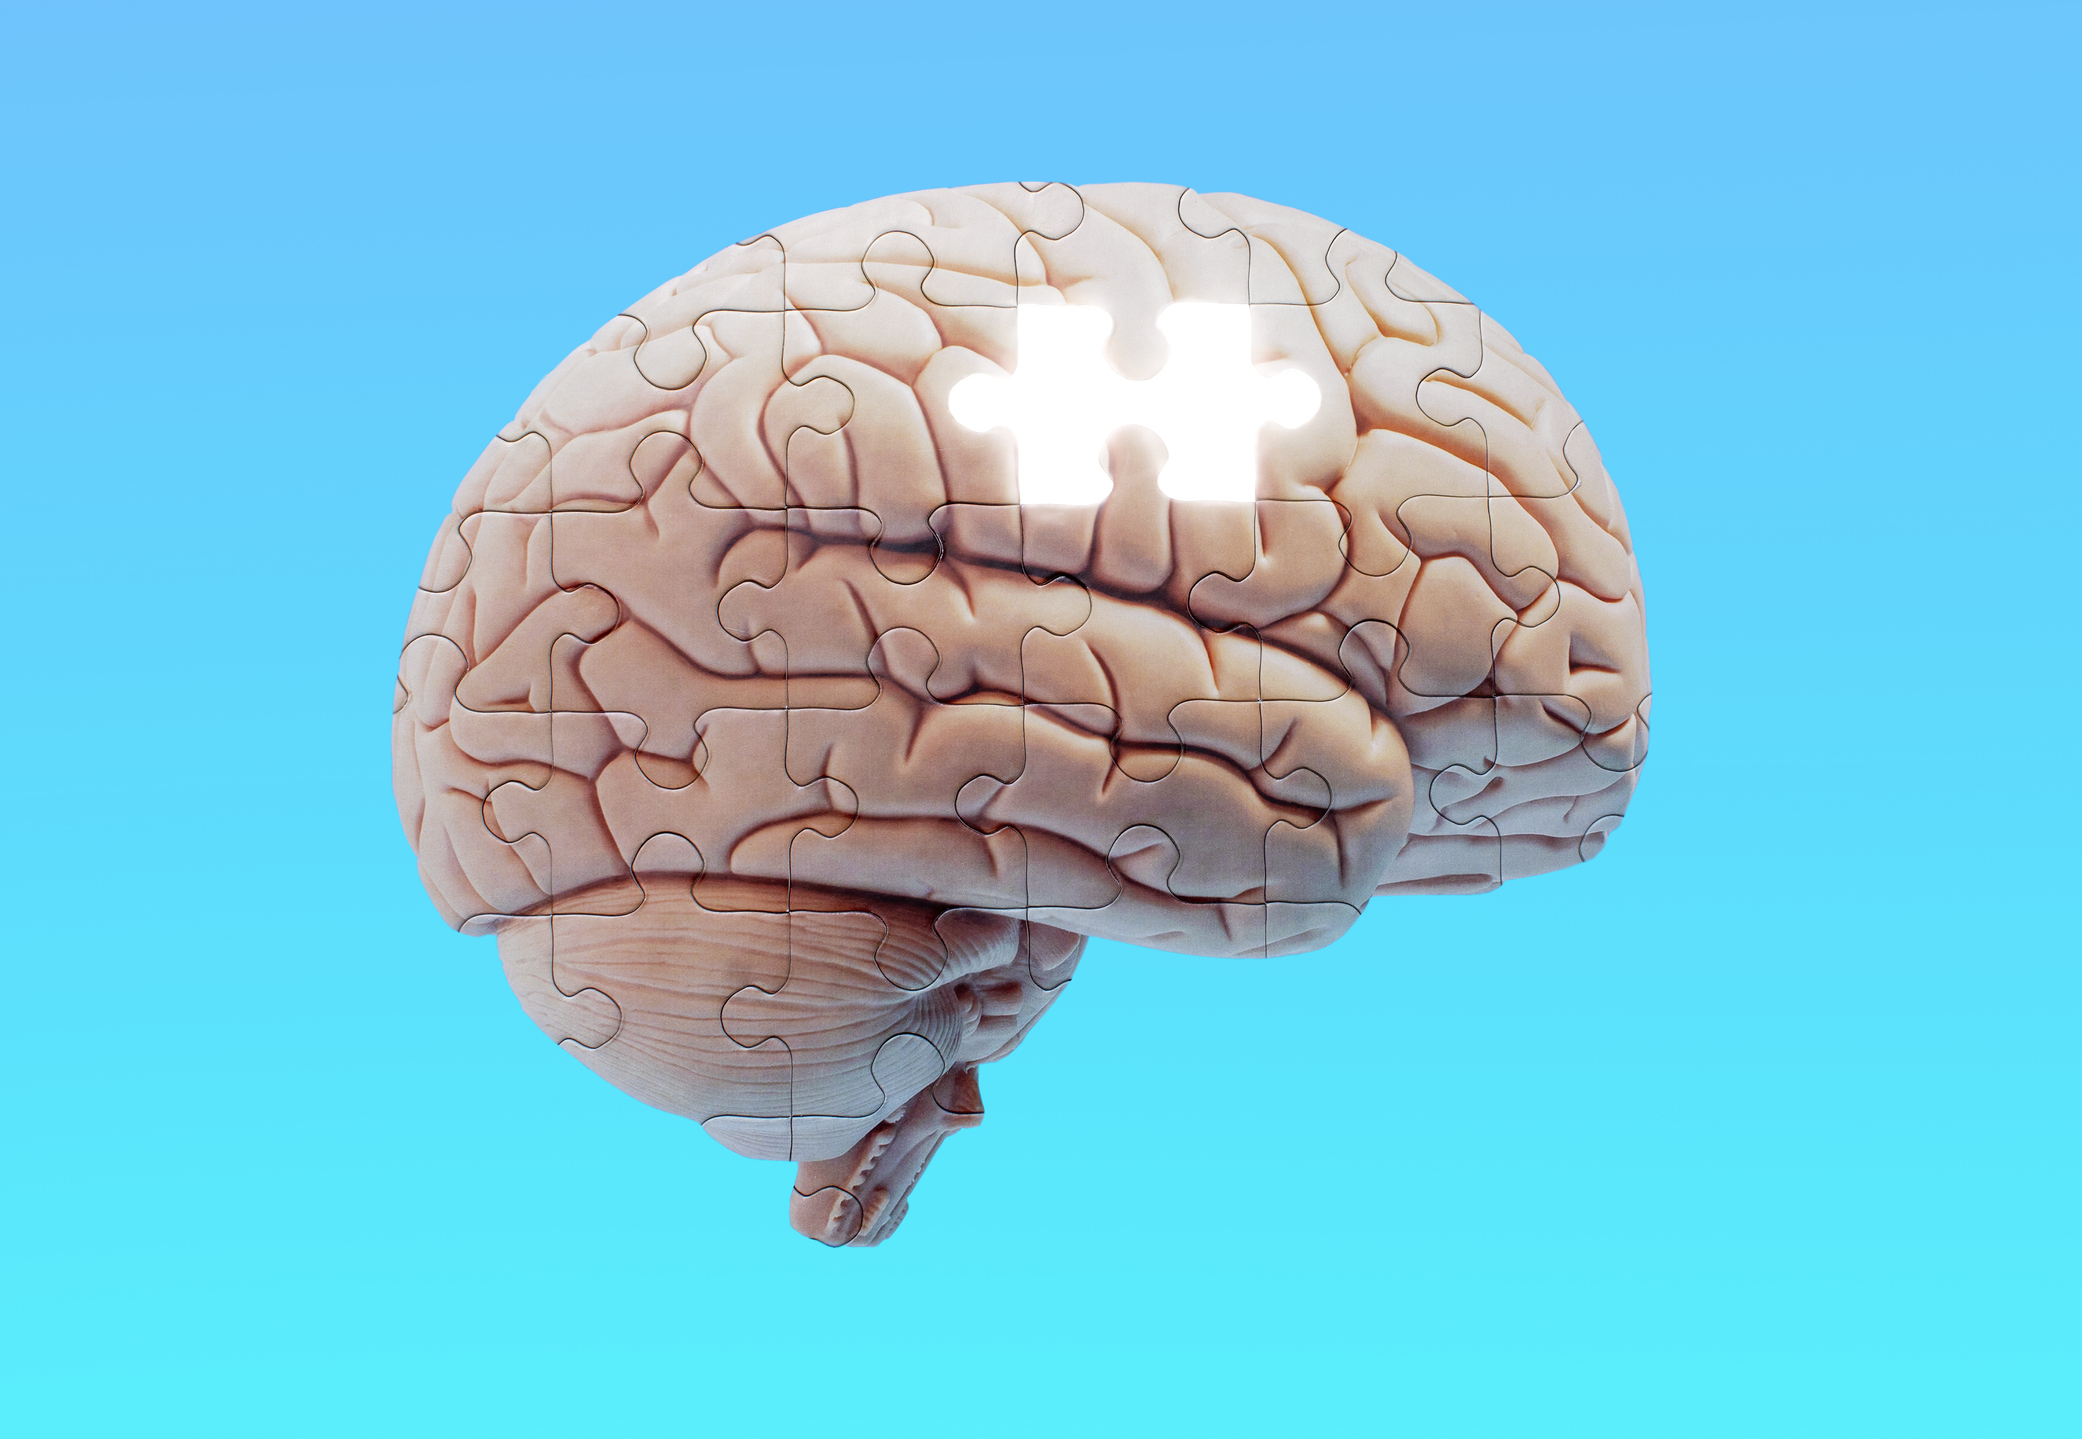 Brain puzzle missing a piece